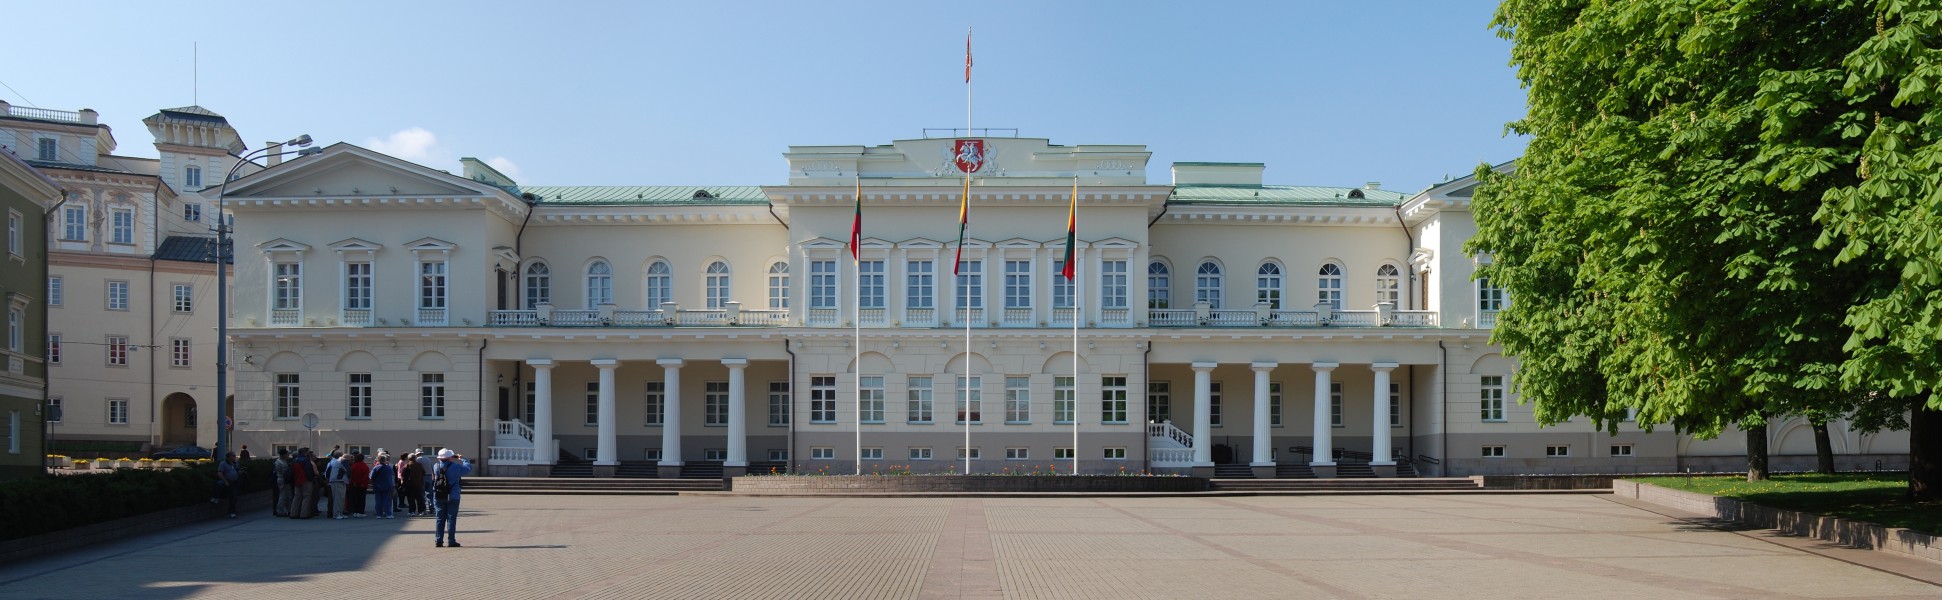 Vilnius presidential palace